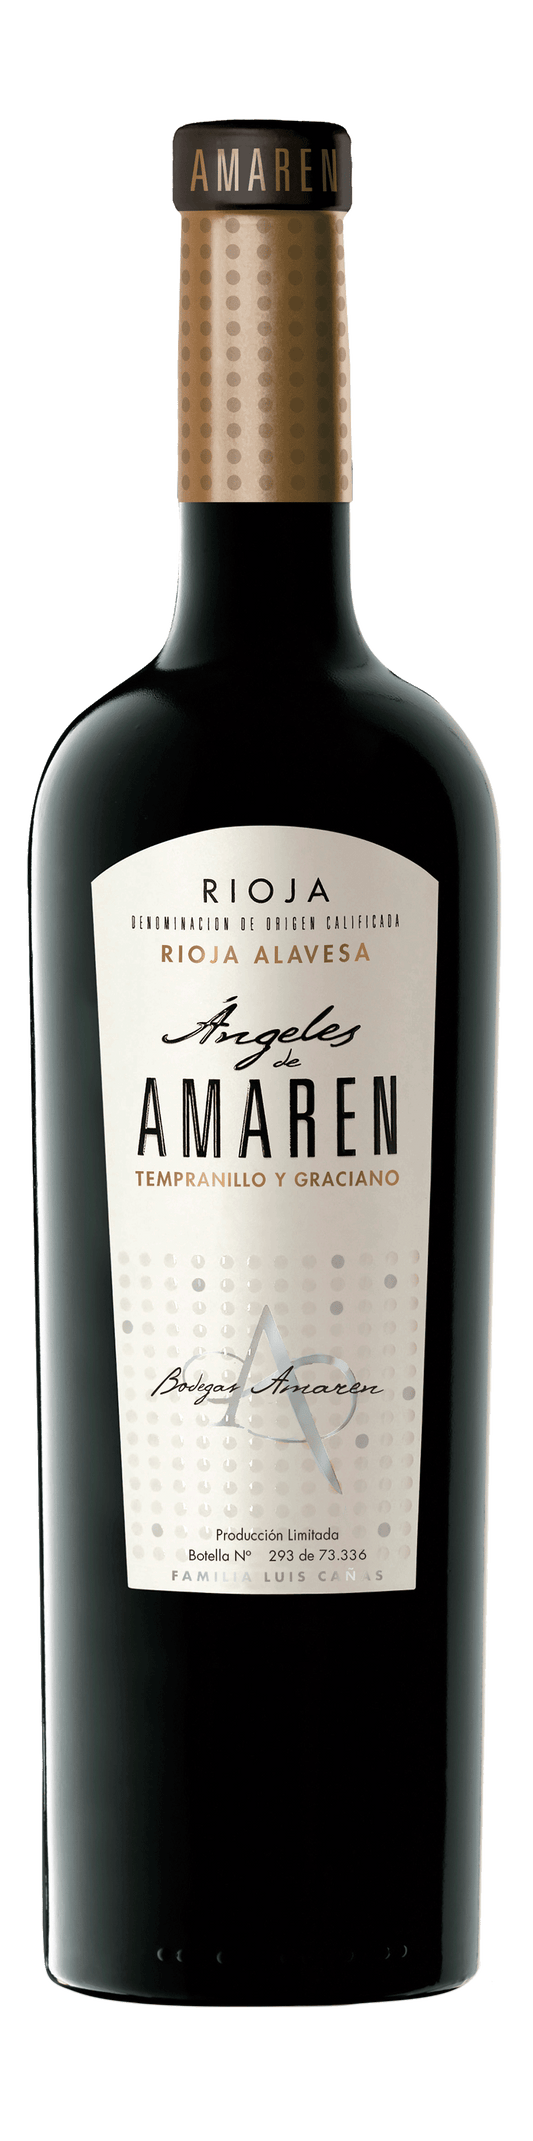 Bodegas Amaren, Ángeles de Amaren, Rioja, Spain, 2017